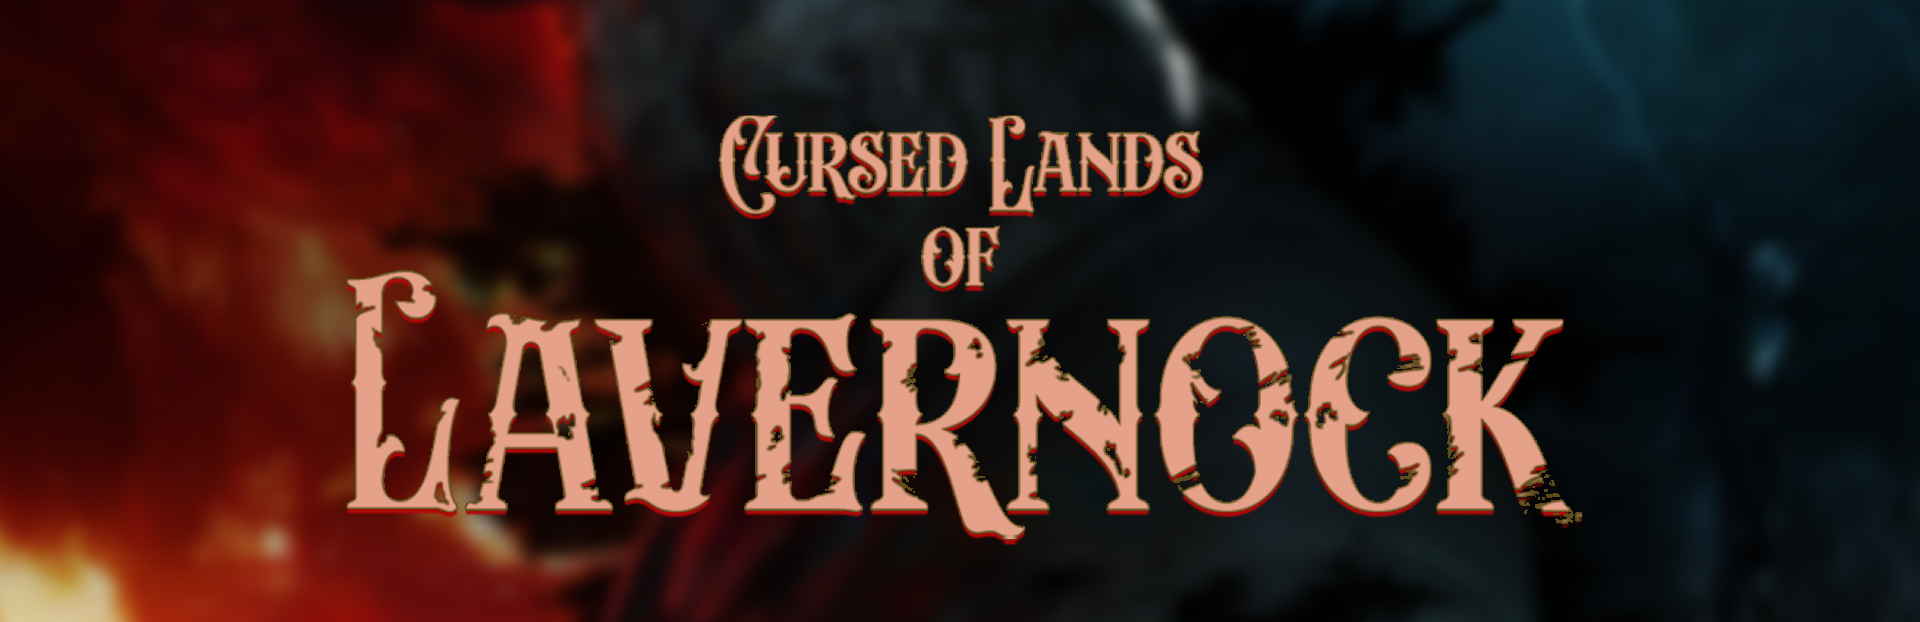 Cursed Lands on Steam